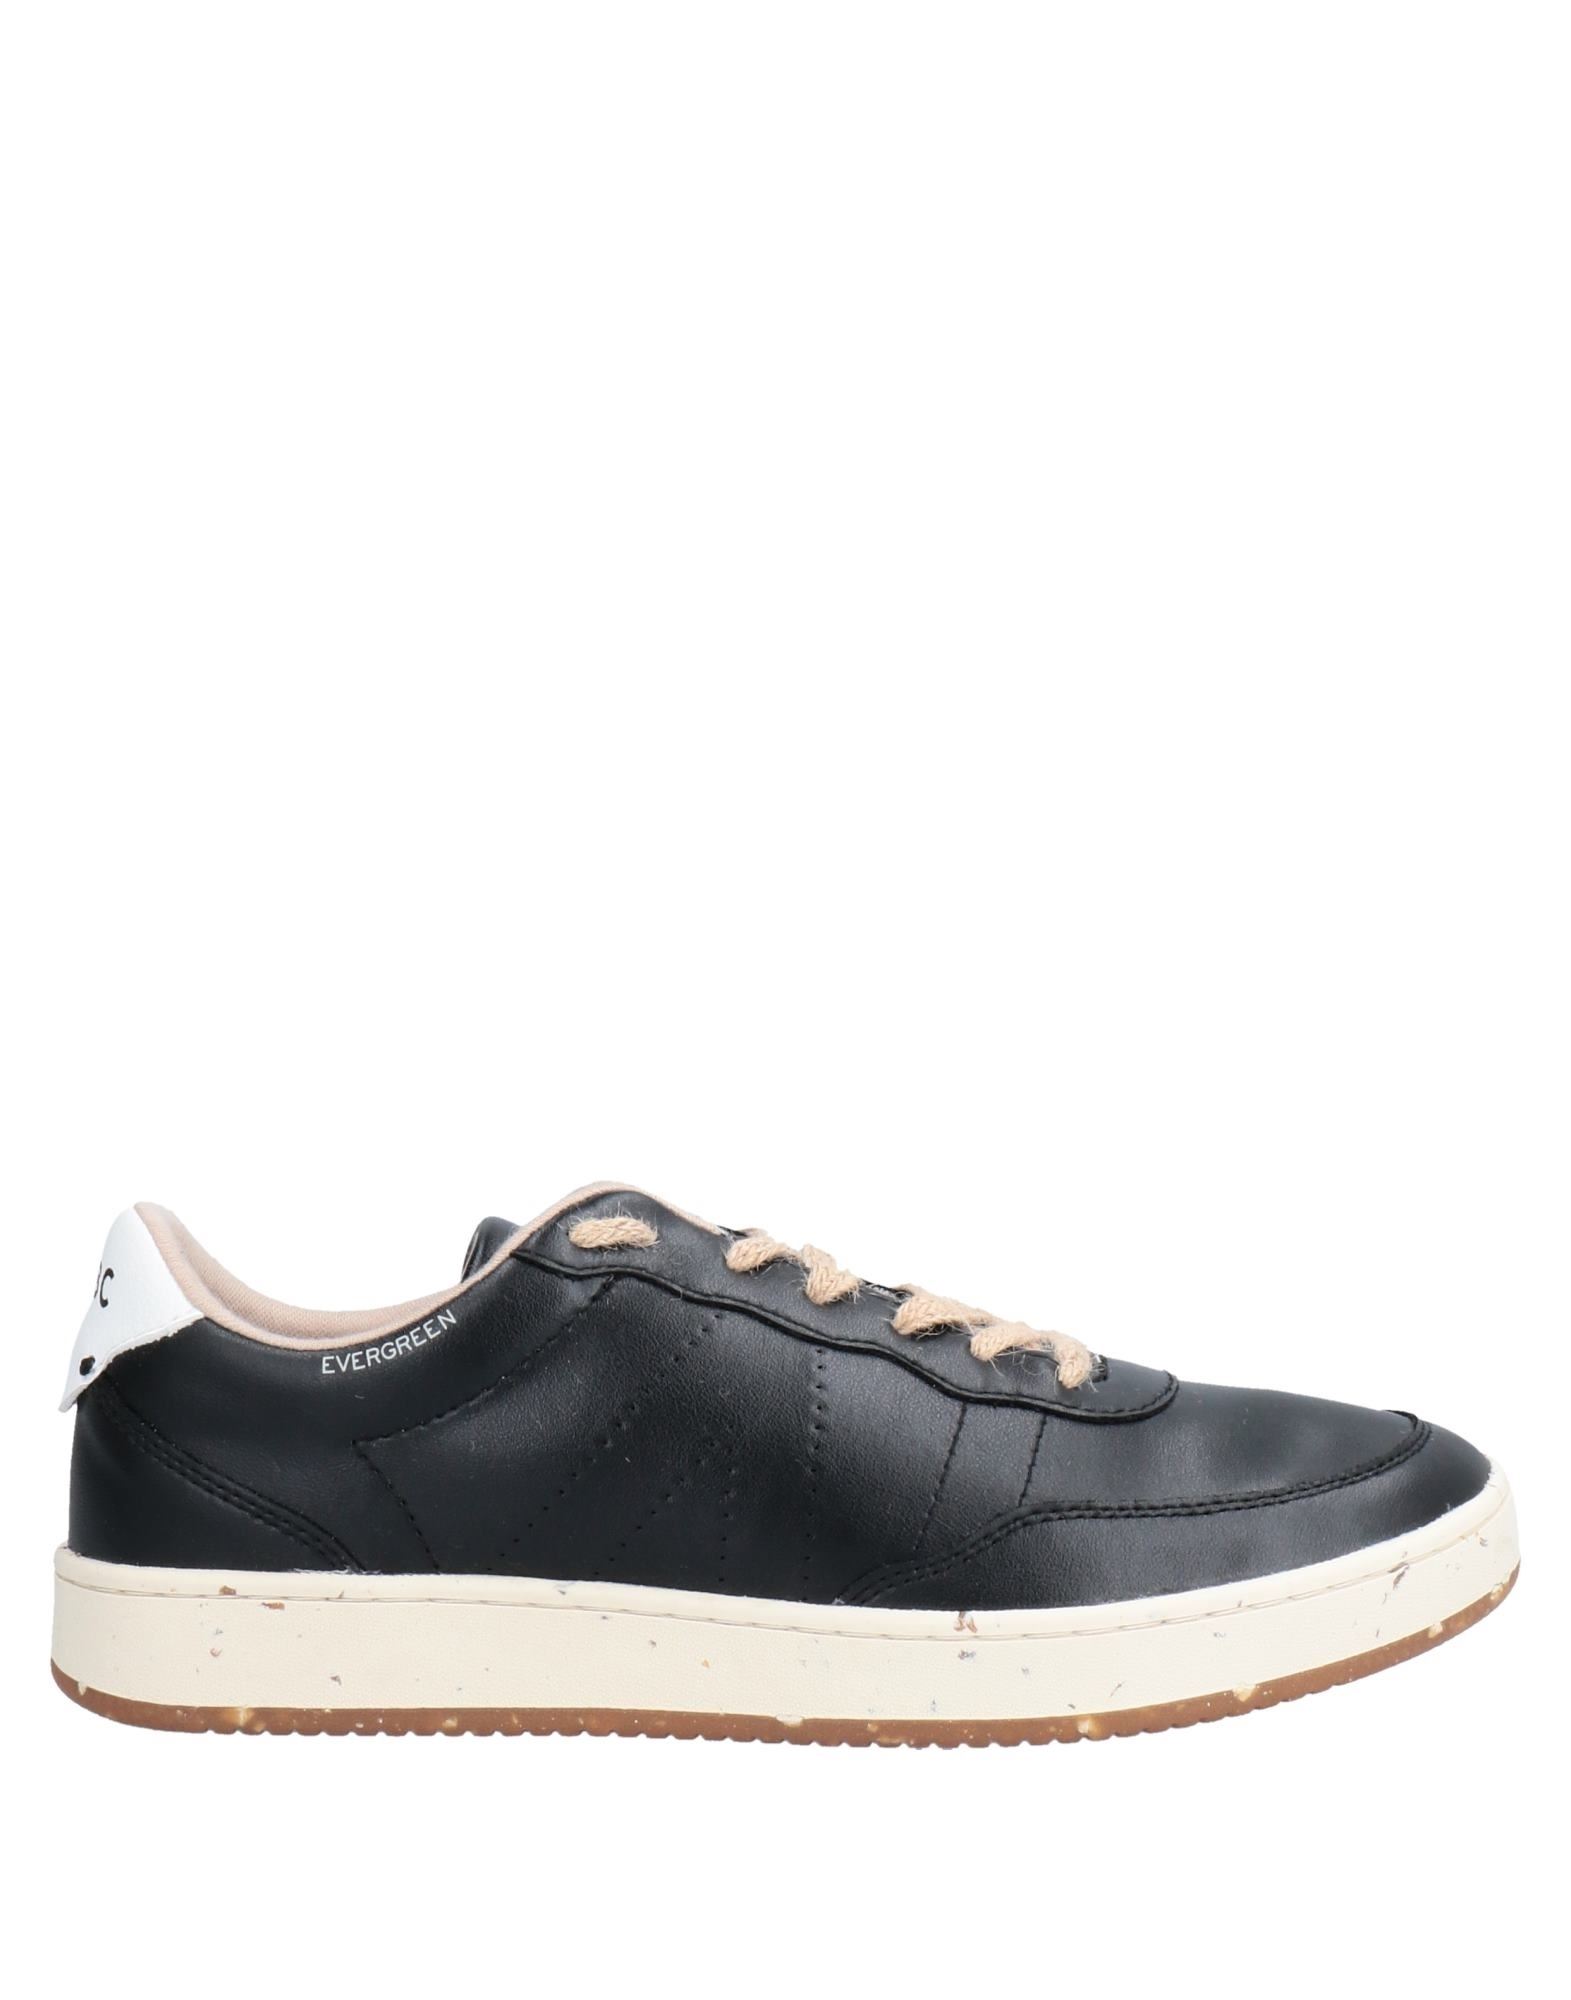 Shop Acbc Man Sneakers Black Size 8 Soft Leather